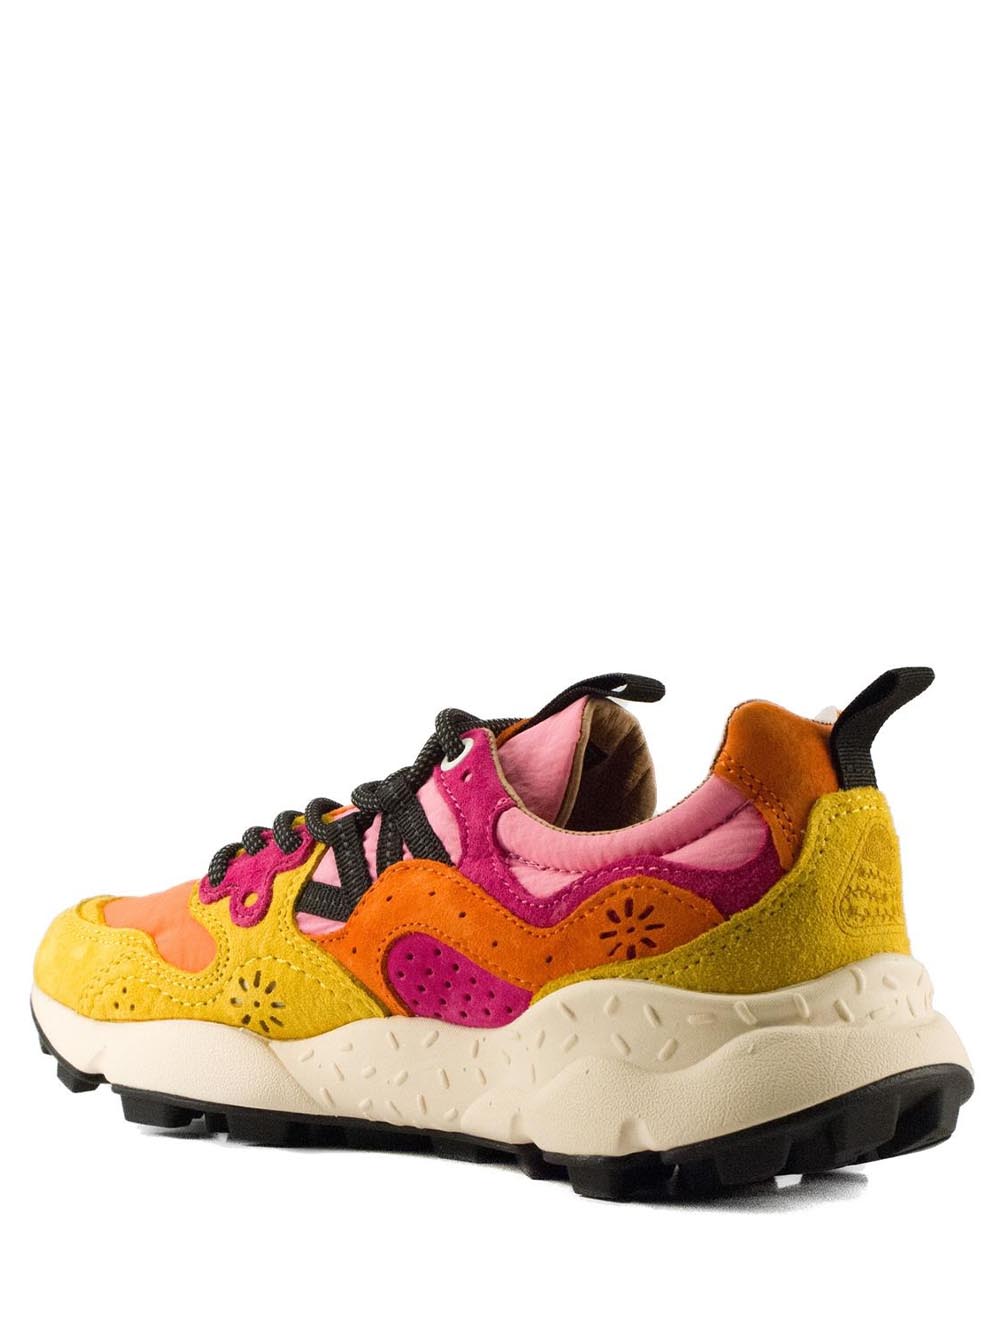 Flower Mountain Sneakers Donna Arancione/Giallo